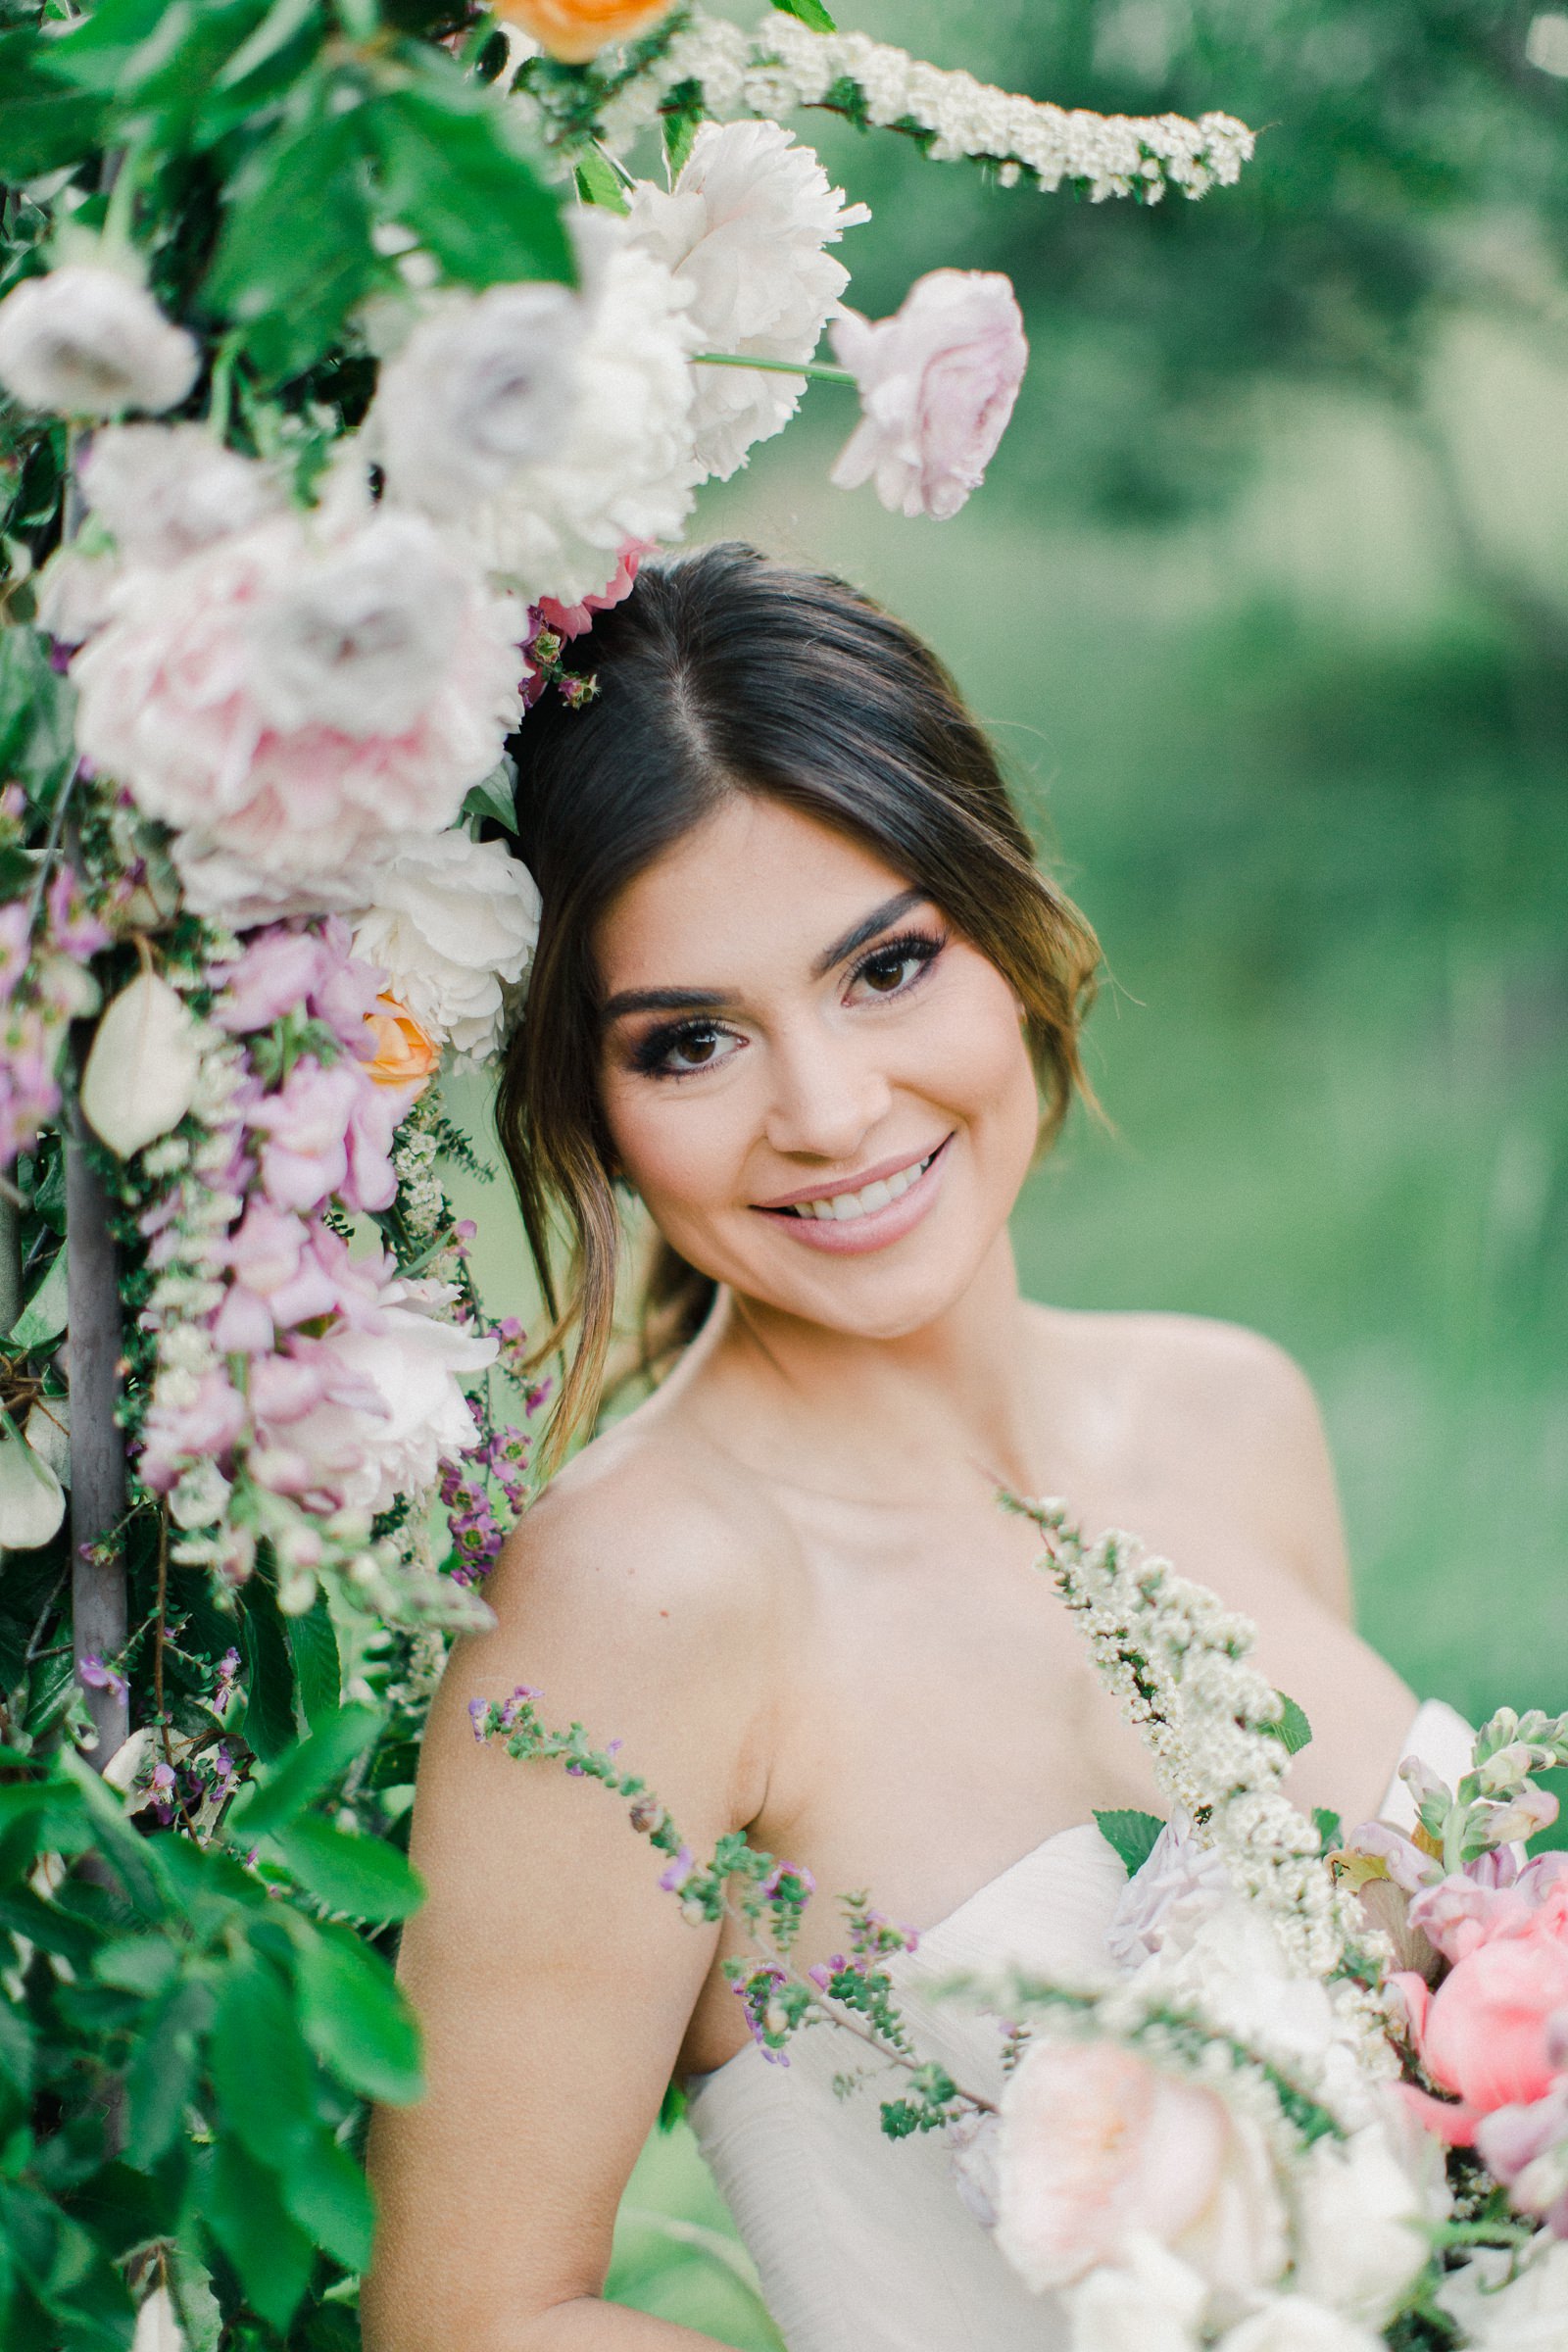 Outdoor Spring Secret Garden Wedding, Provo Utah Film Wedding Photography, floral arch wedding flowers, bride wearing BHLDN wedding dress with sweetheart neckline